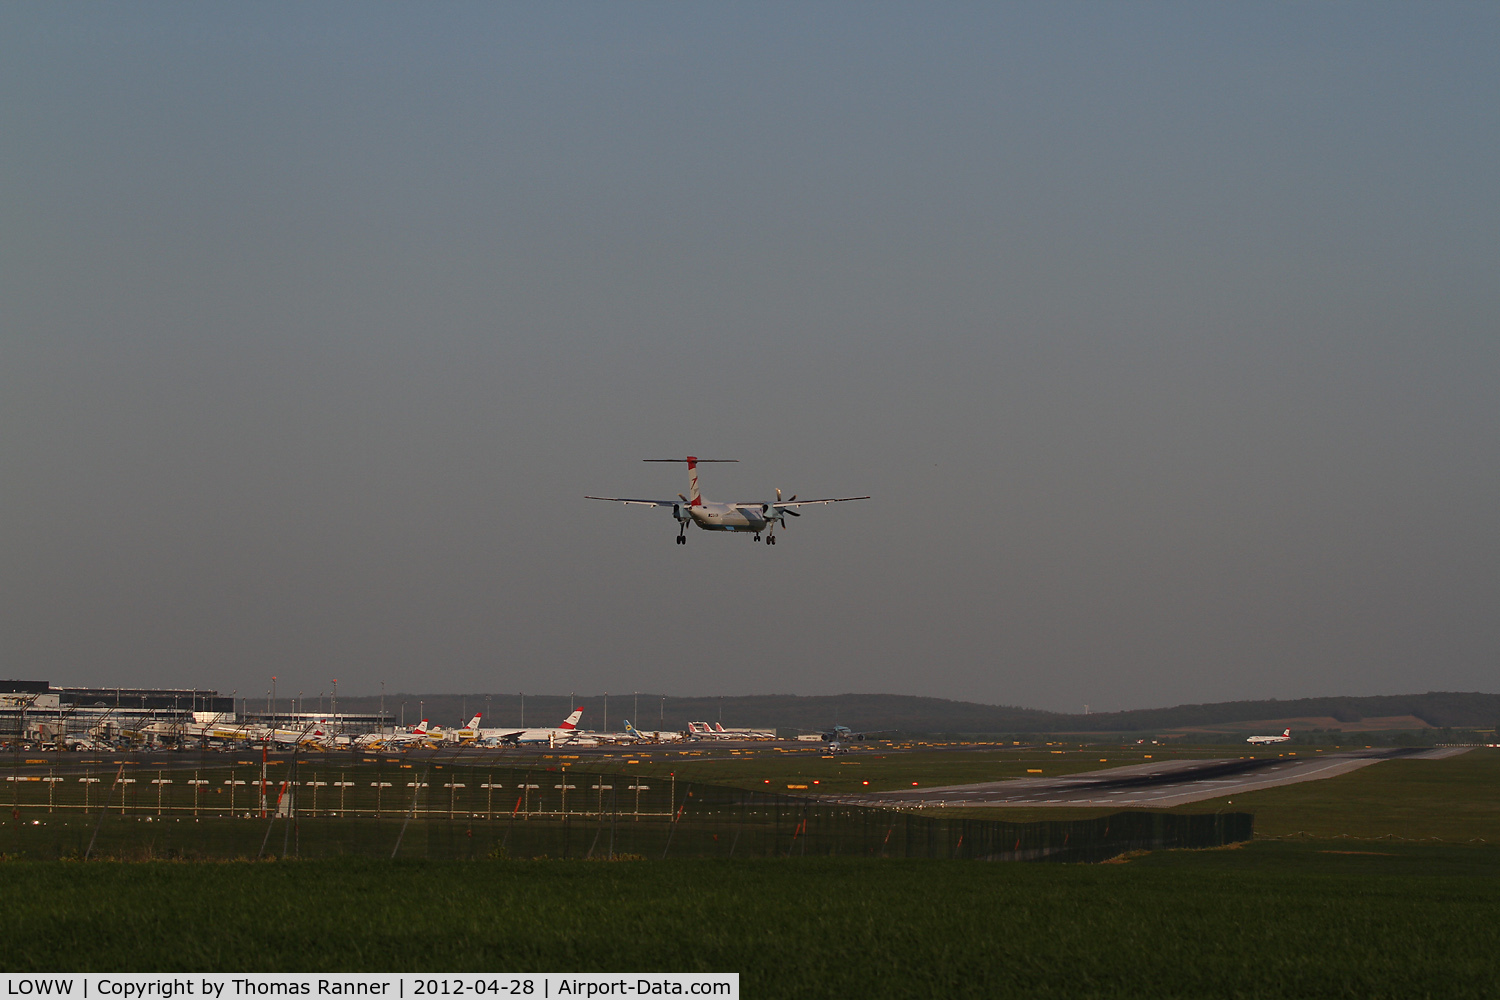 Vienna International Airport, Vienna Austria (LOWW) - Austrian Arrows DHC 8 clear to land.